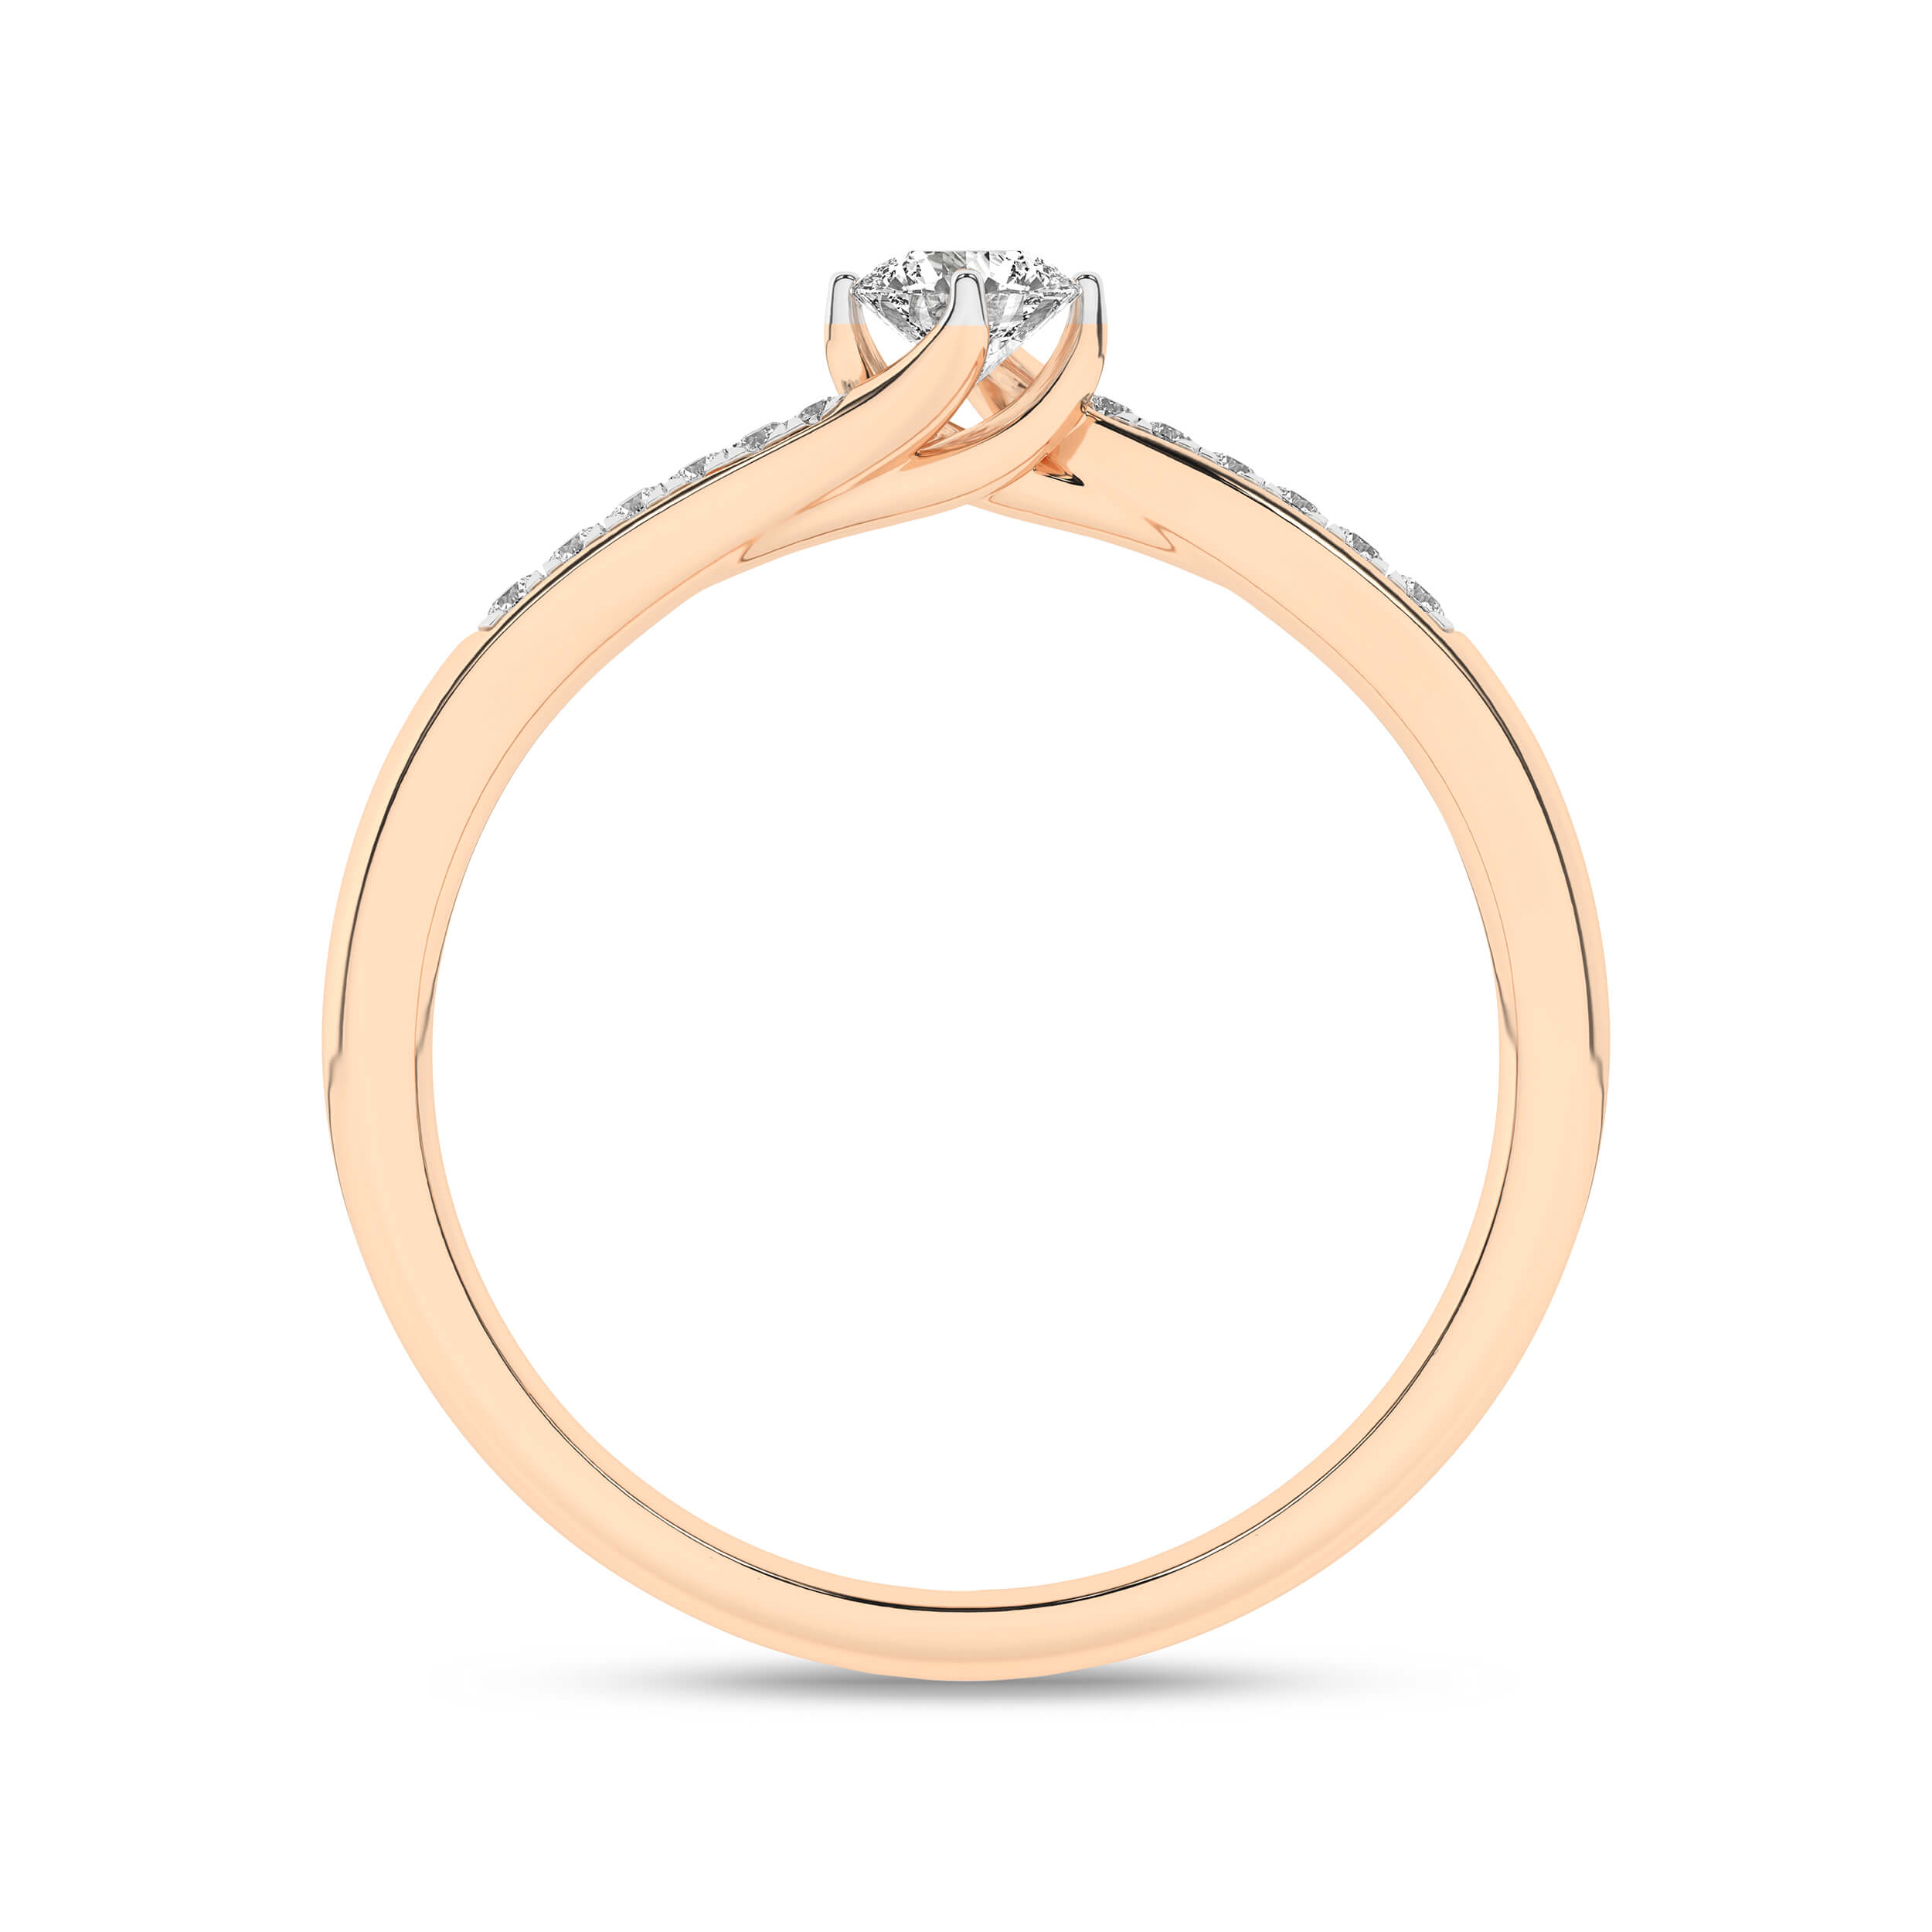 Inel de logodna din Aur Roz 14K cu Diamante 0.18Ct, articol RB16847EG, previzualizare foto 2